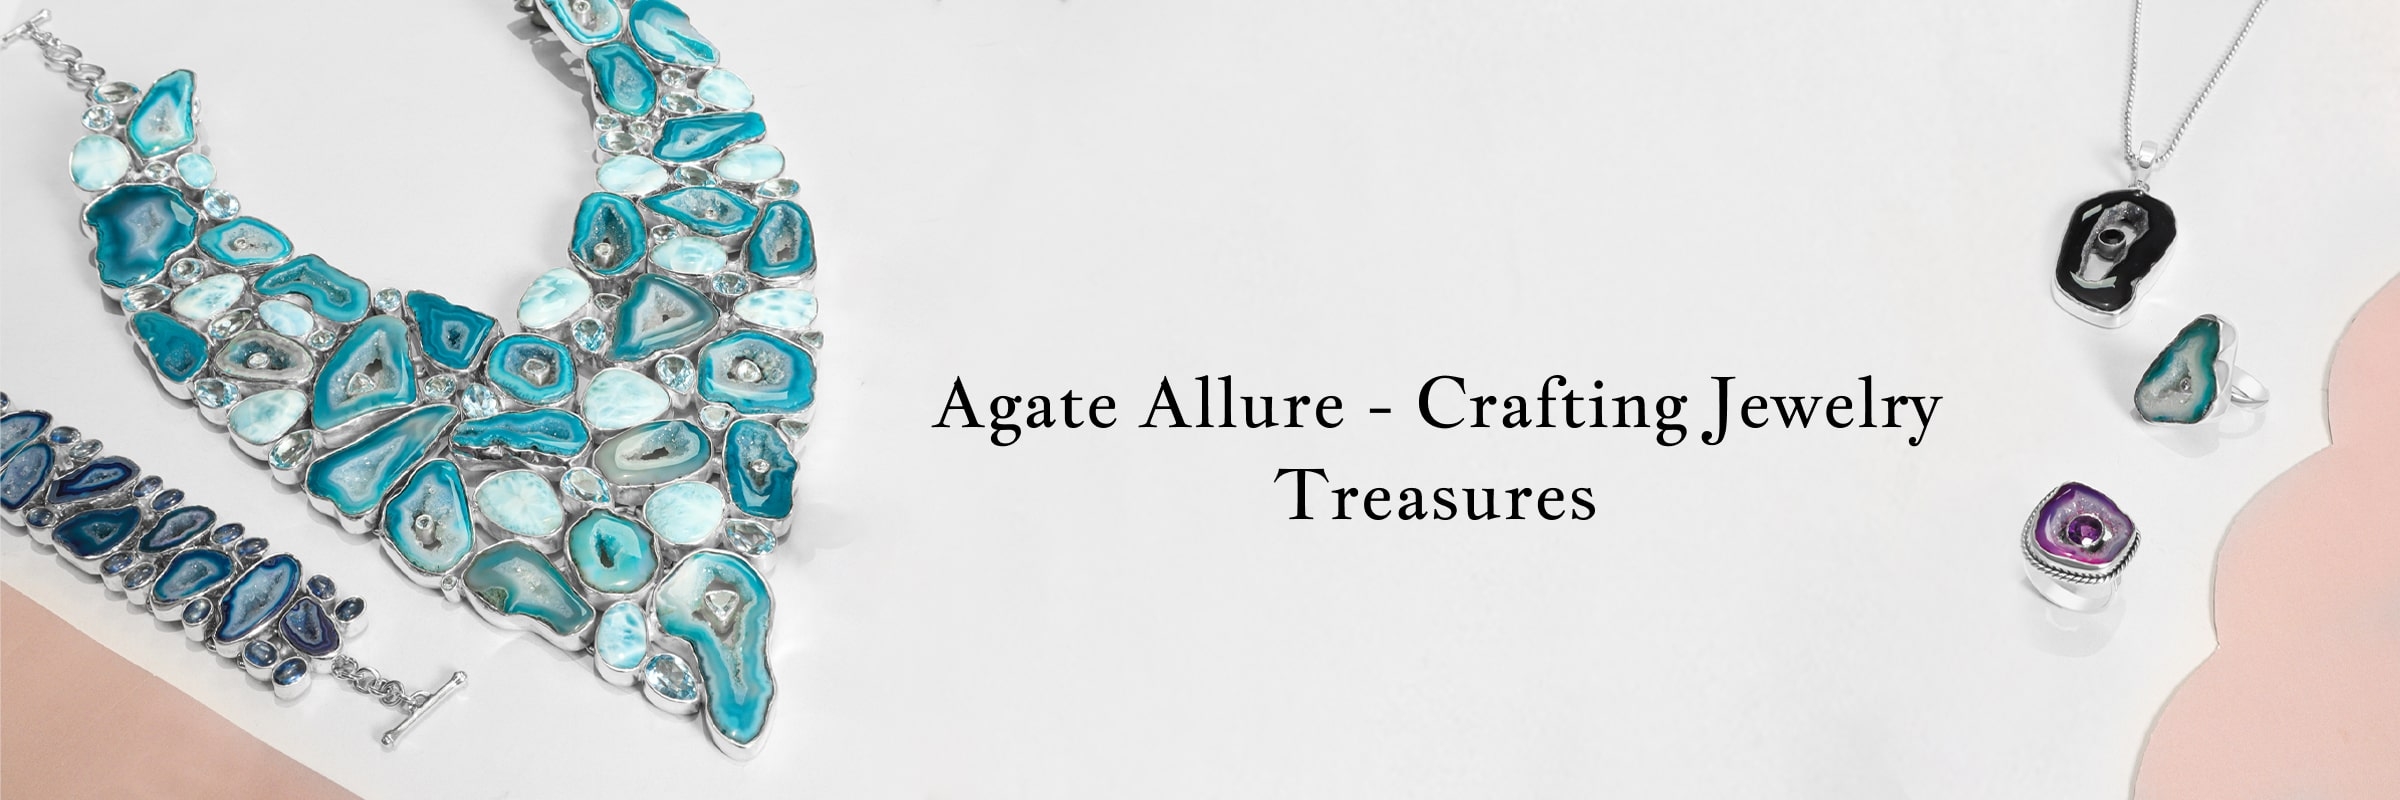 Types Of Agate Gemstone